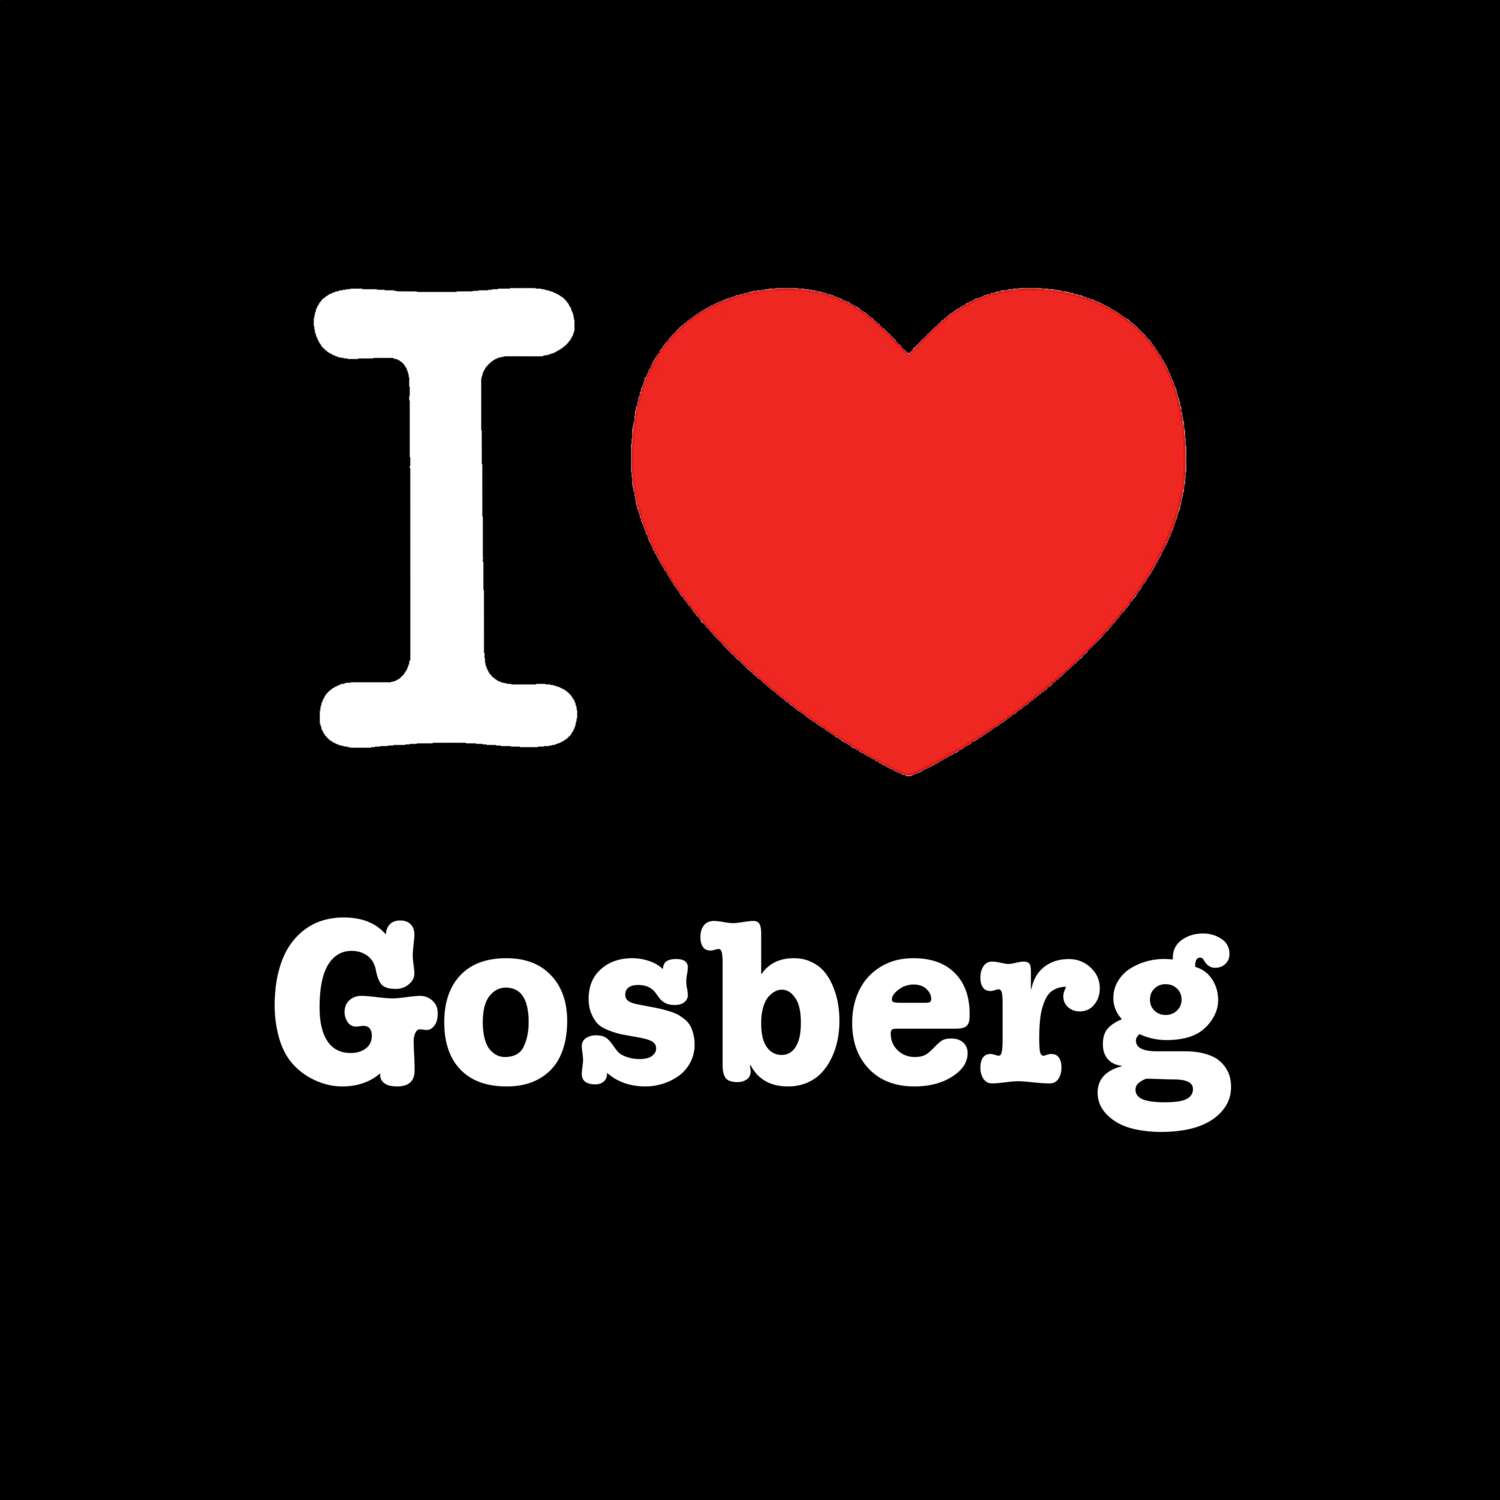 Gosberg T-Shirt »I love«